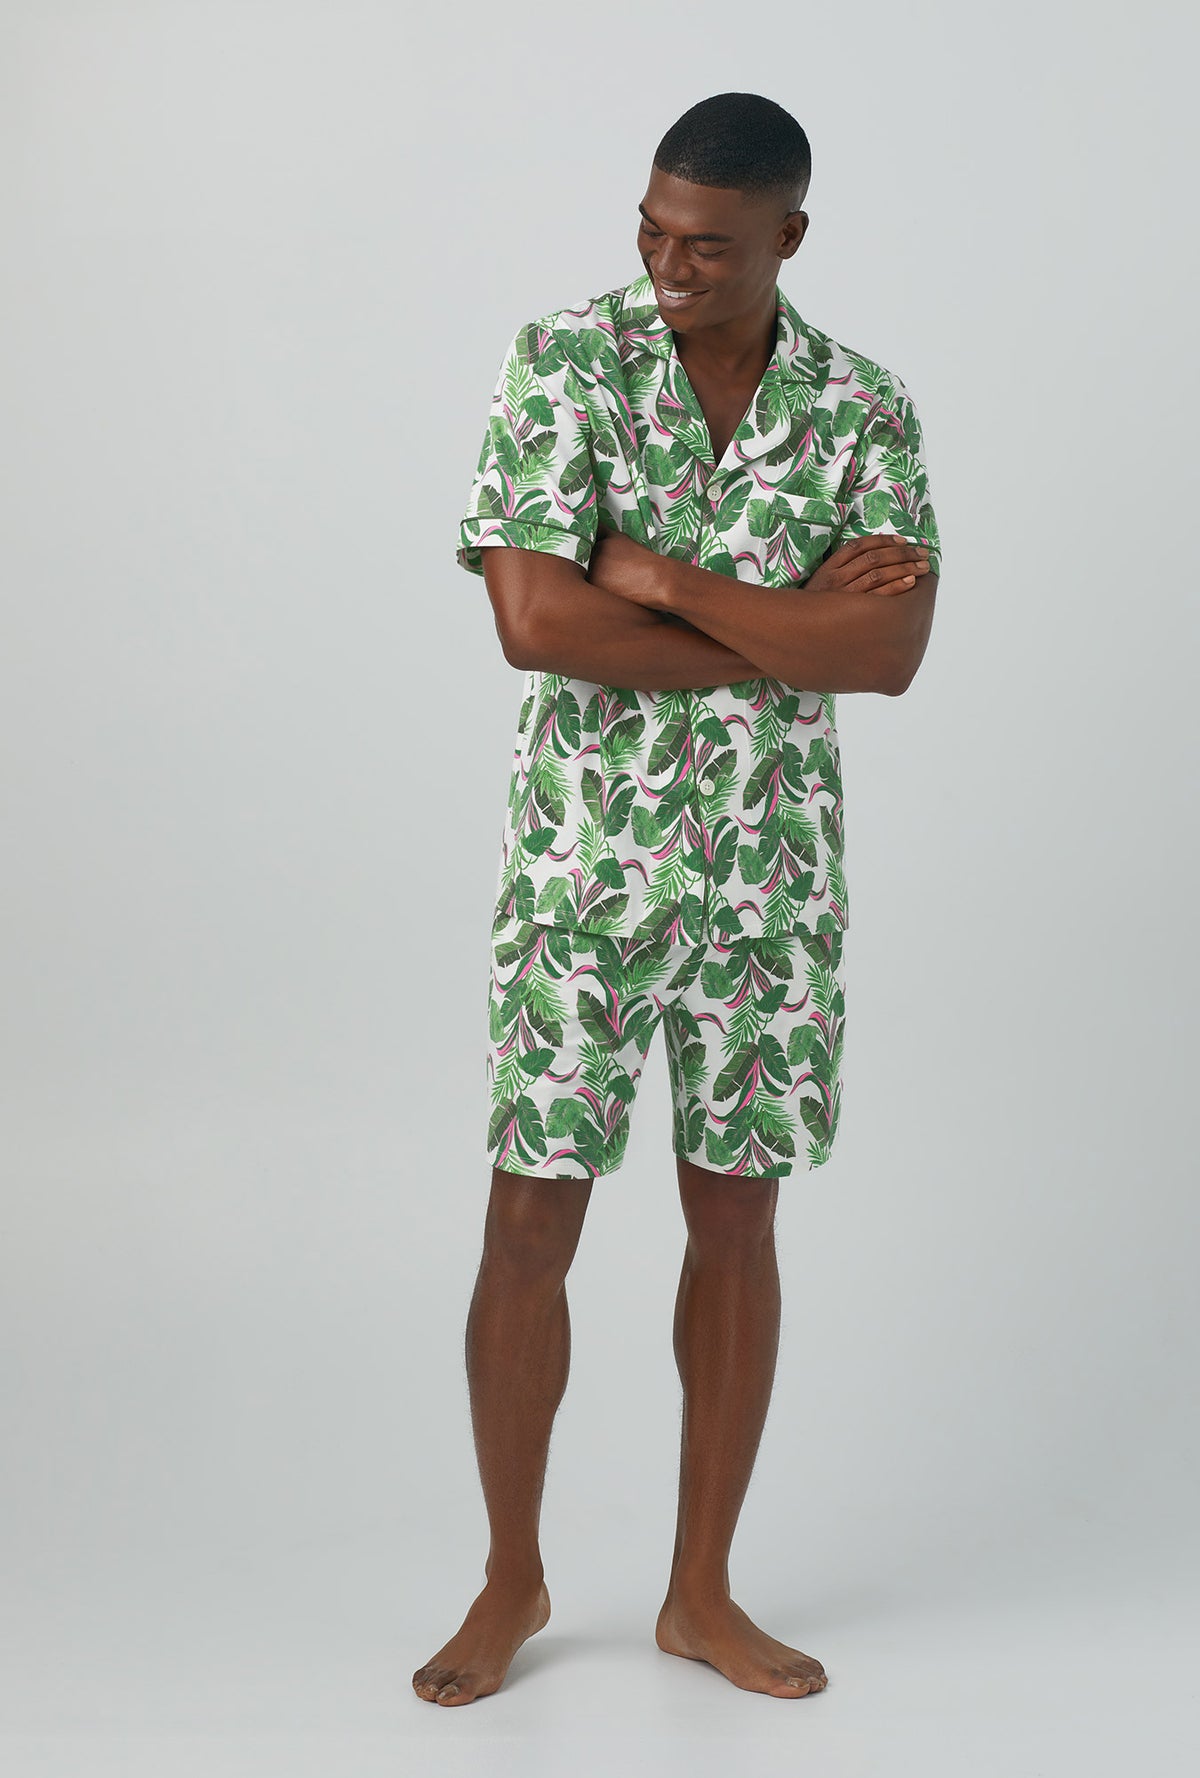 A man wearing green Short Sleeve Notch Stretch Jersey Short PJ Set with Palm Valley print